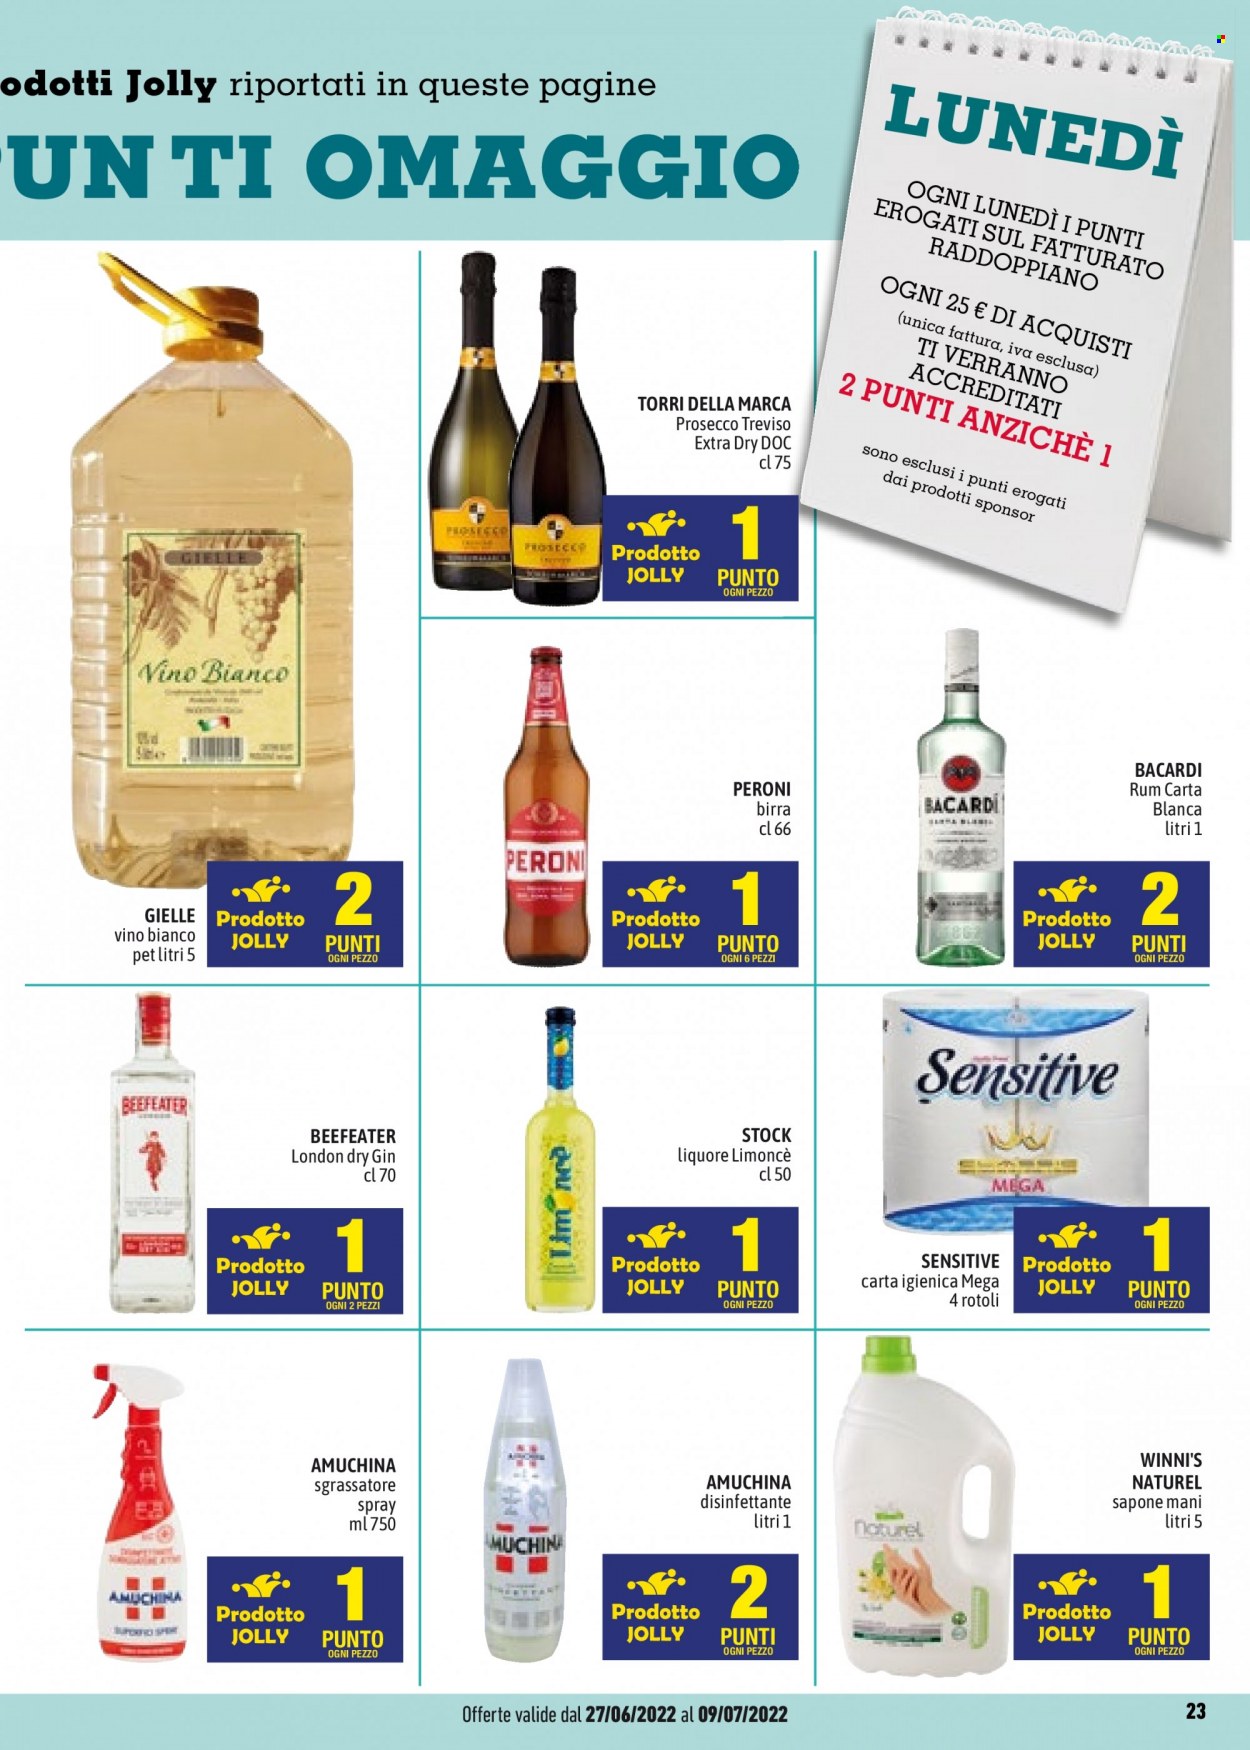 thumbnail - Volantino C+C Cash & Carry - 27/6/2022 - 9/7/2022 - Prodotti in offerta - Peroni, birra, vino bianco, Prosecco, vino, Beefeater, rum, Limoncè, liquore, gin, London Dry Gin, Bacardi, carta igienica, Winni's, sgrassatore, sapone, Amuchina. Pagina 23.